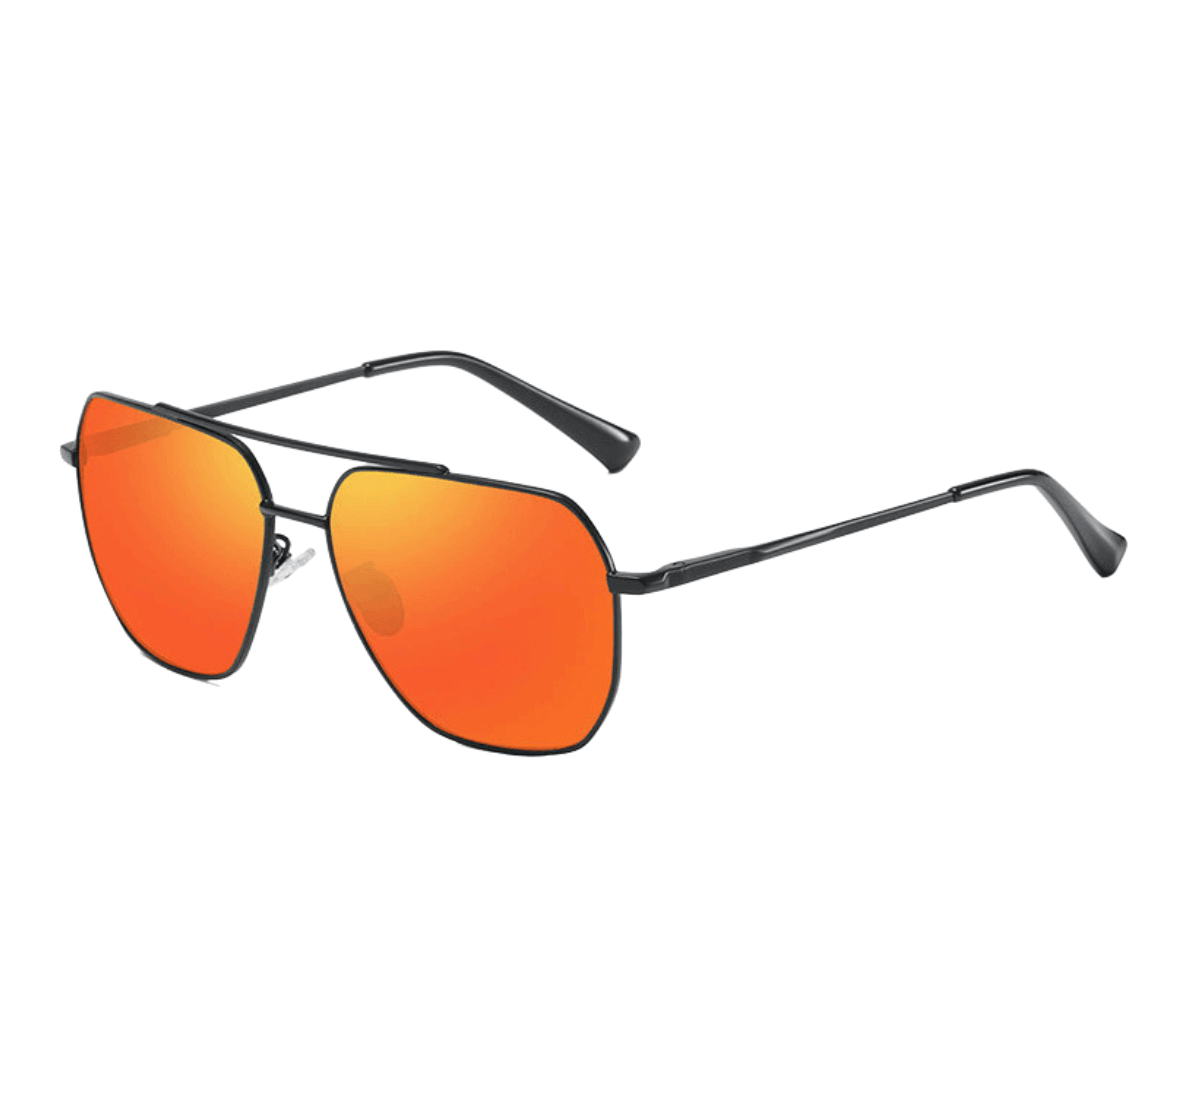 mens wholesale sunglasses, metal sunglasses wholesale, Sunglasses Manufacturer, sunglasses supplier